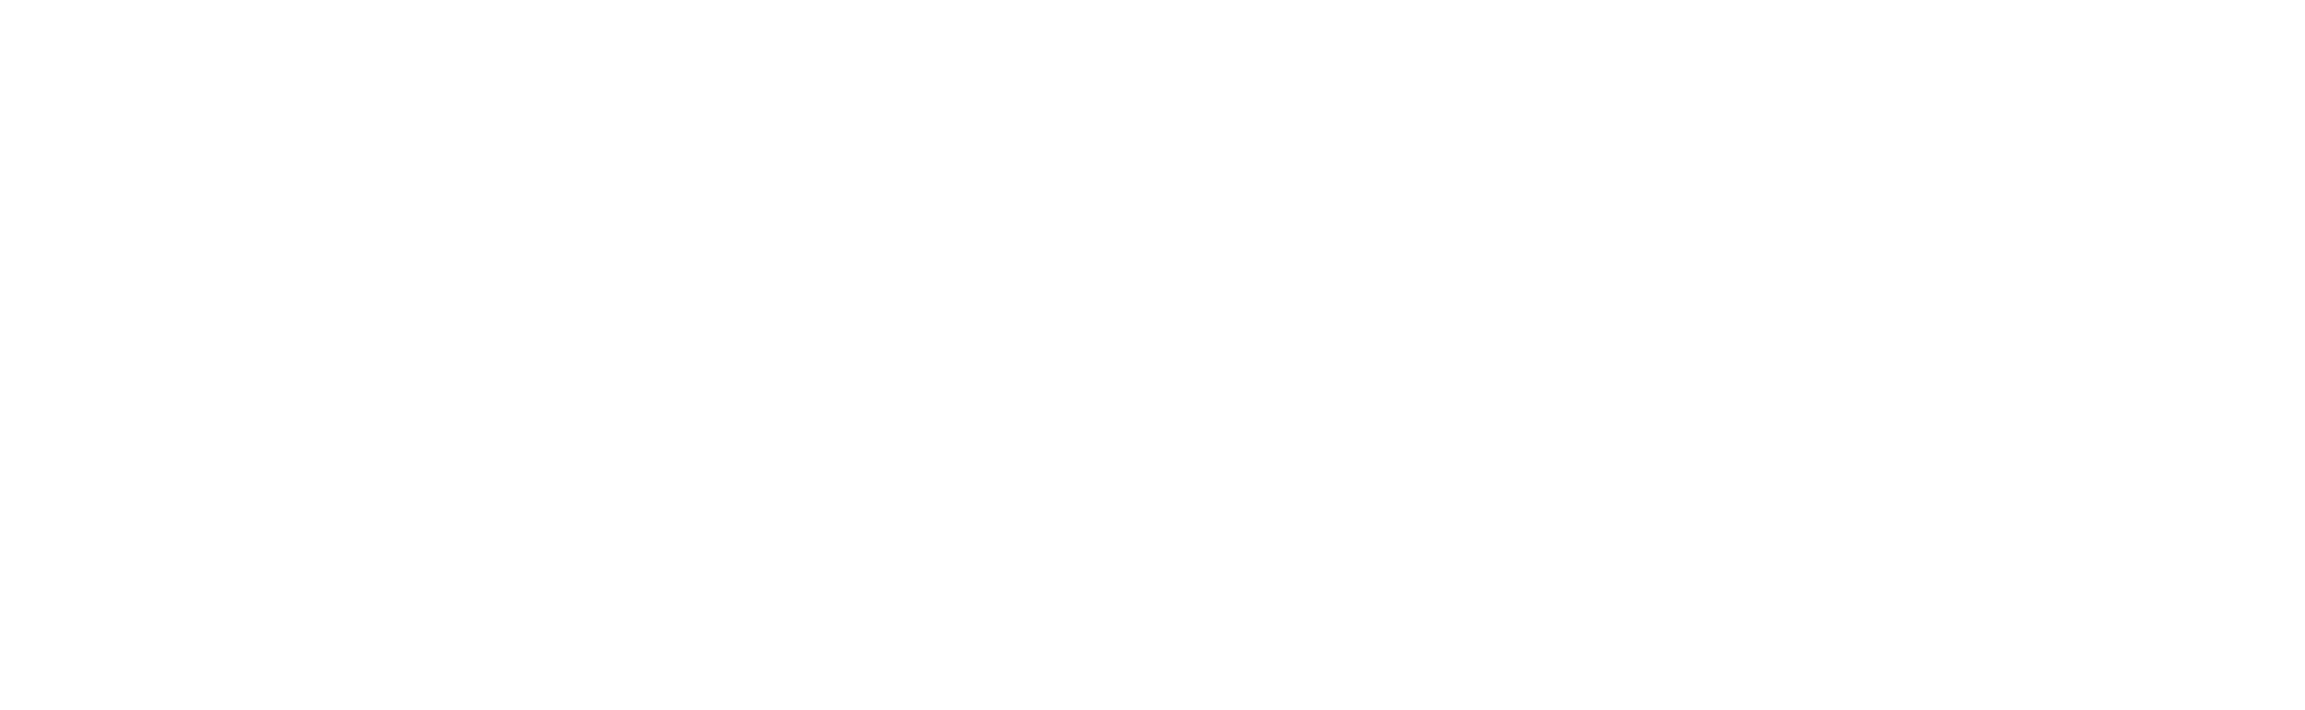 CNPQ logo rodape